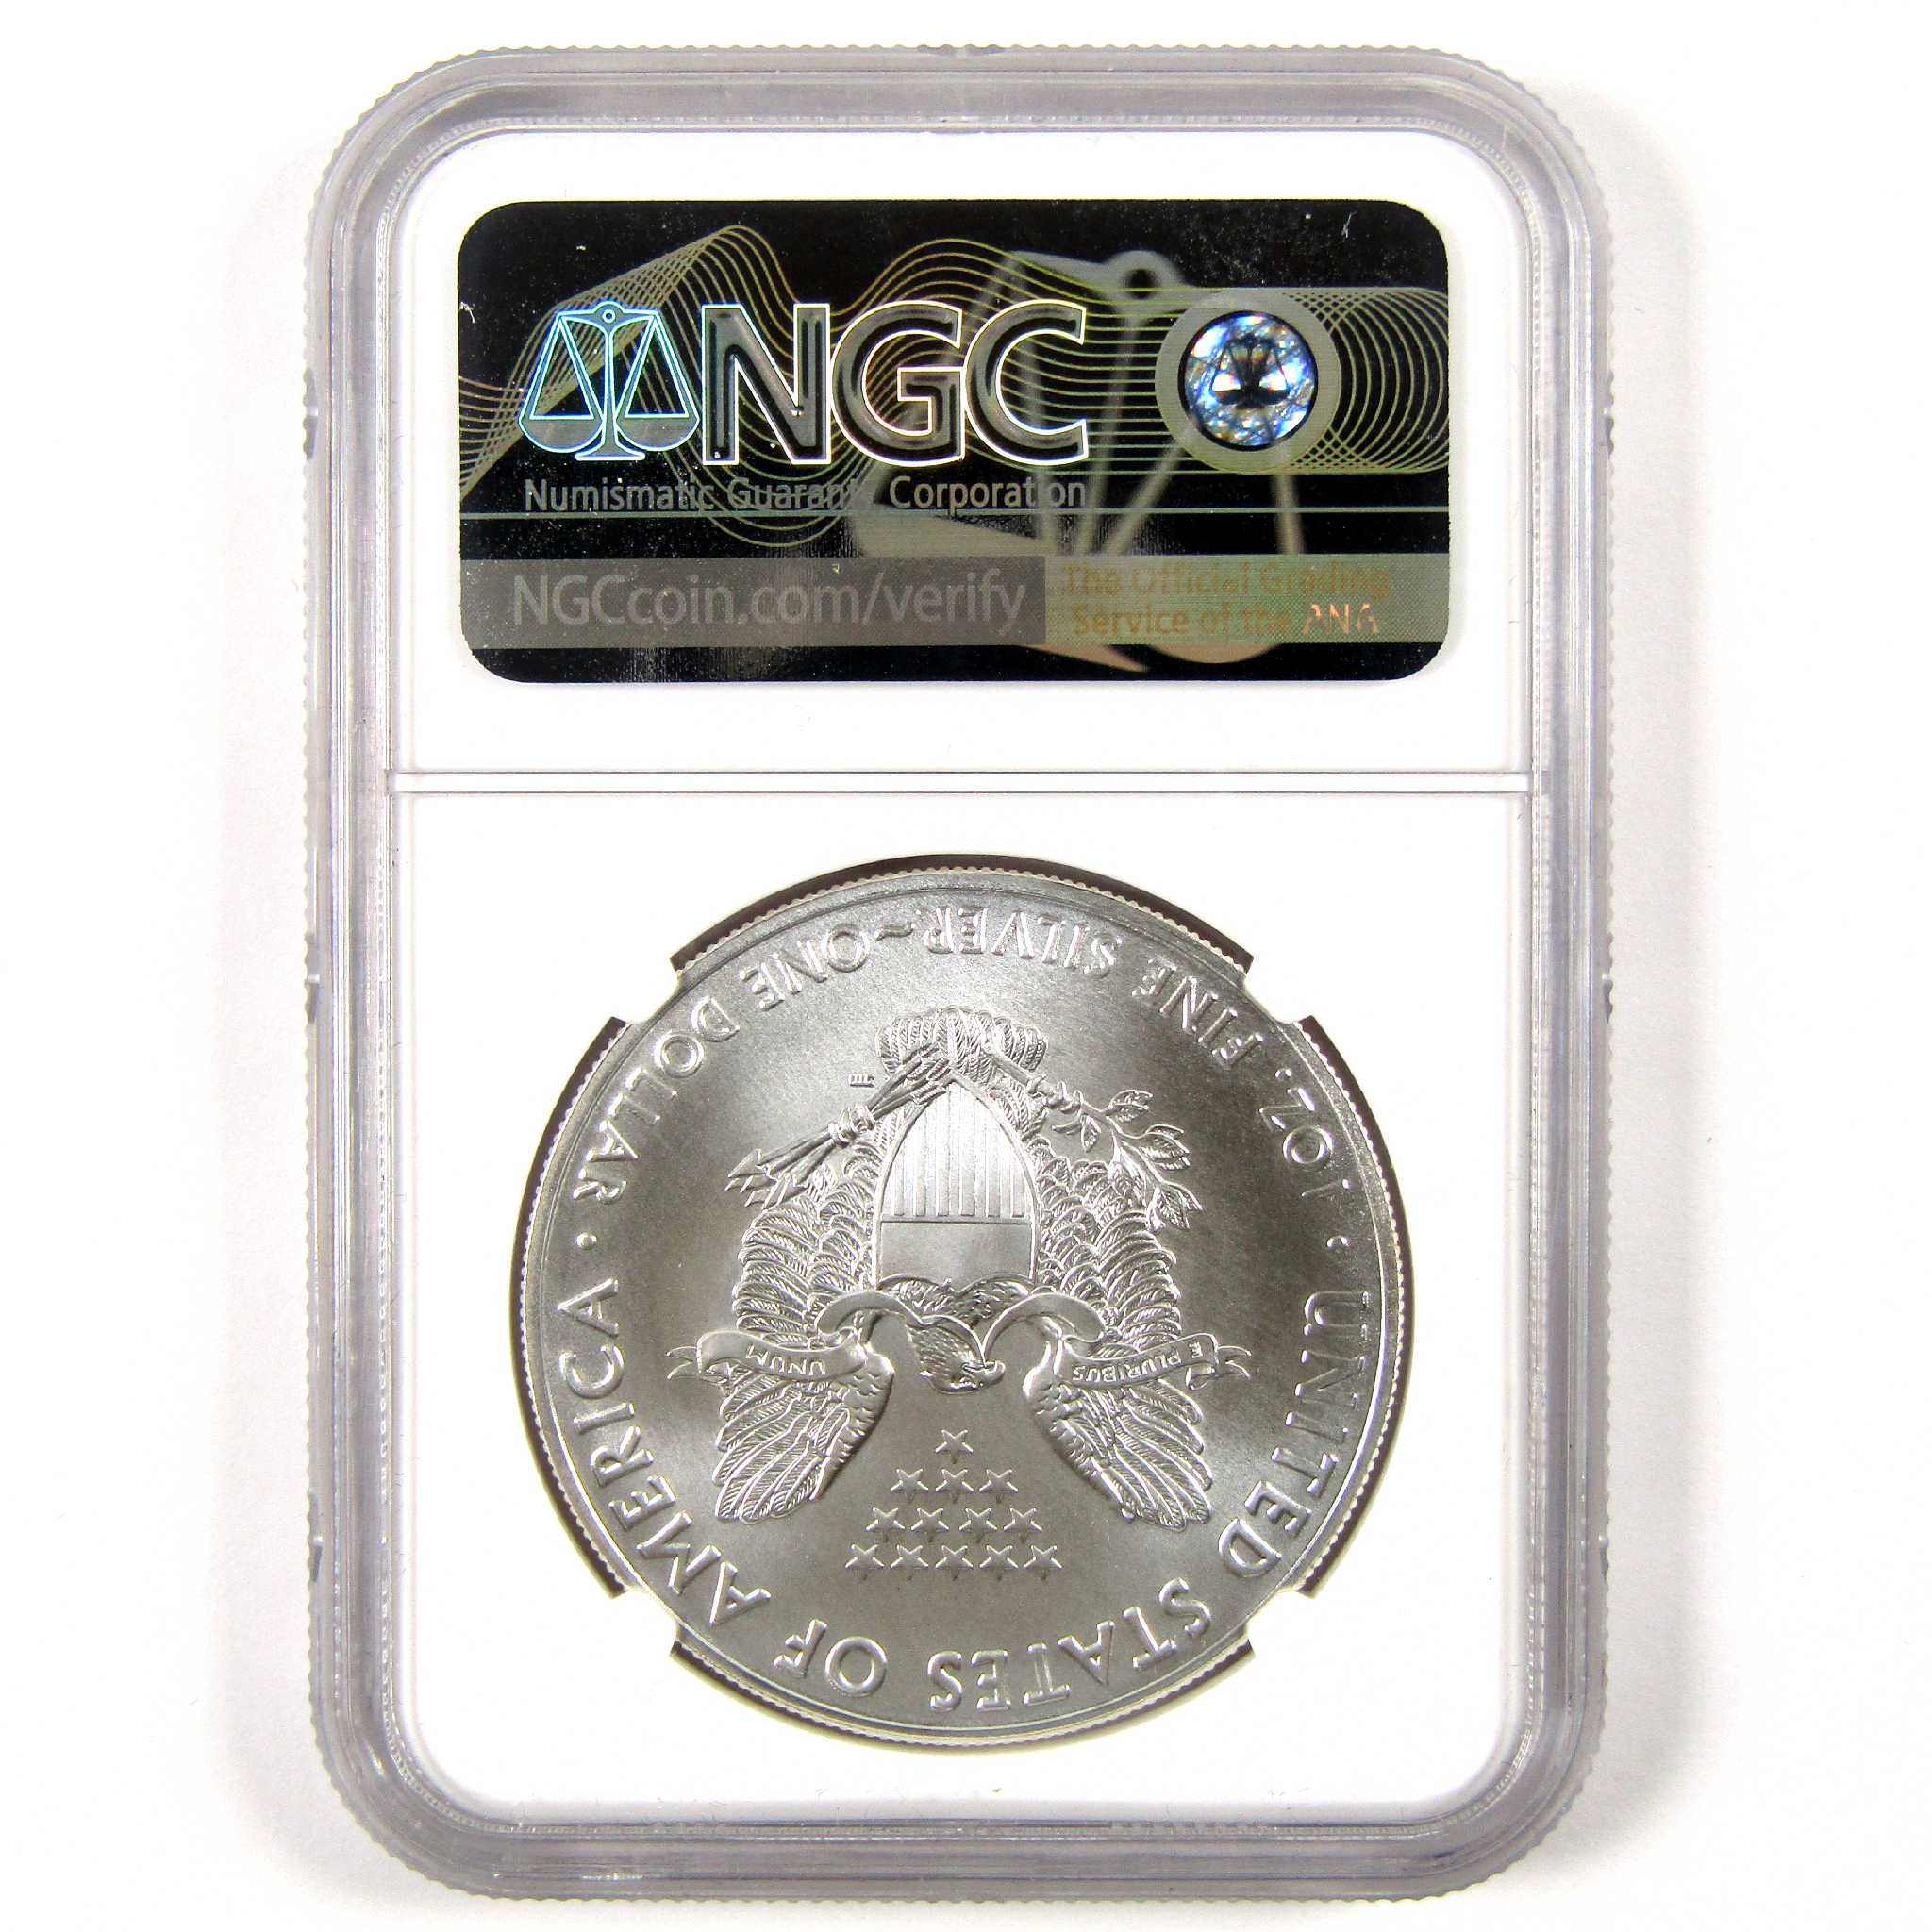 2020 American Silver Eagle MS 70 NGC $1 Unc SKU:CPC6441